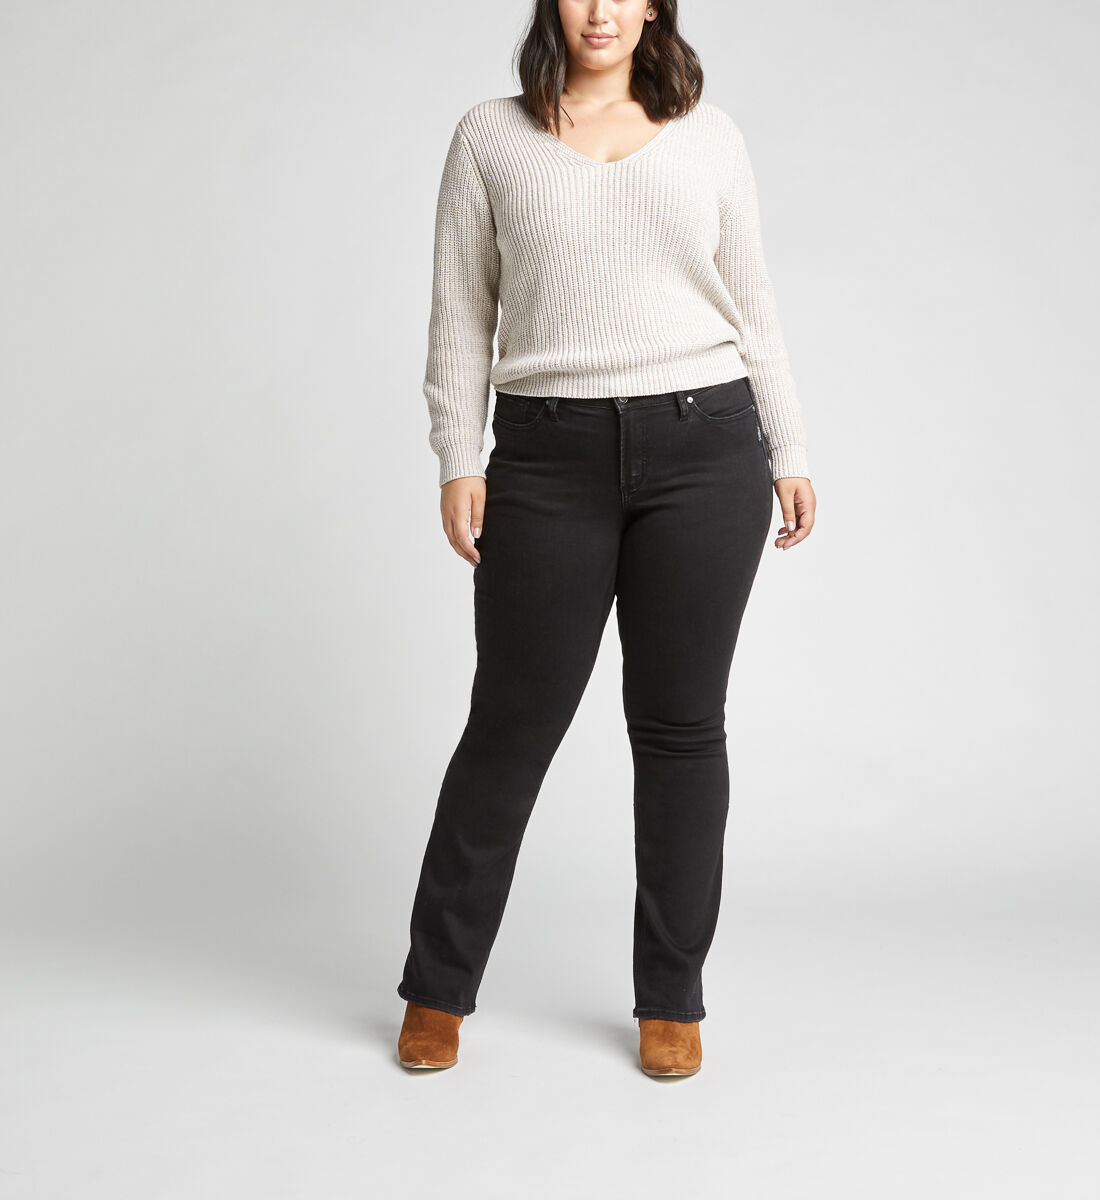 Suki Mid Rise Slim Bootcut Jeans Plus Size,Black Alt Image 1